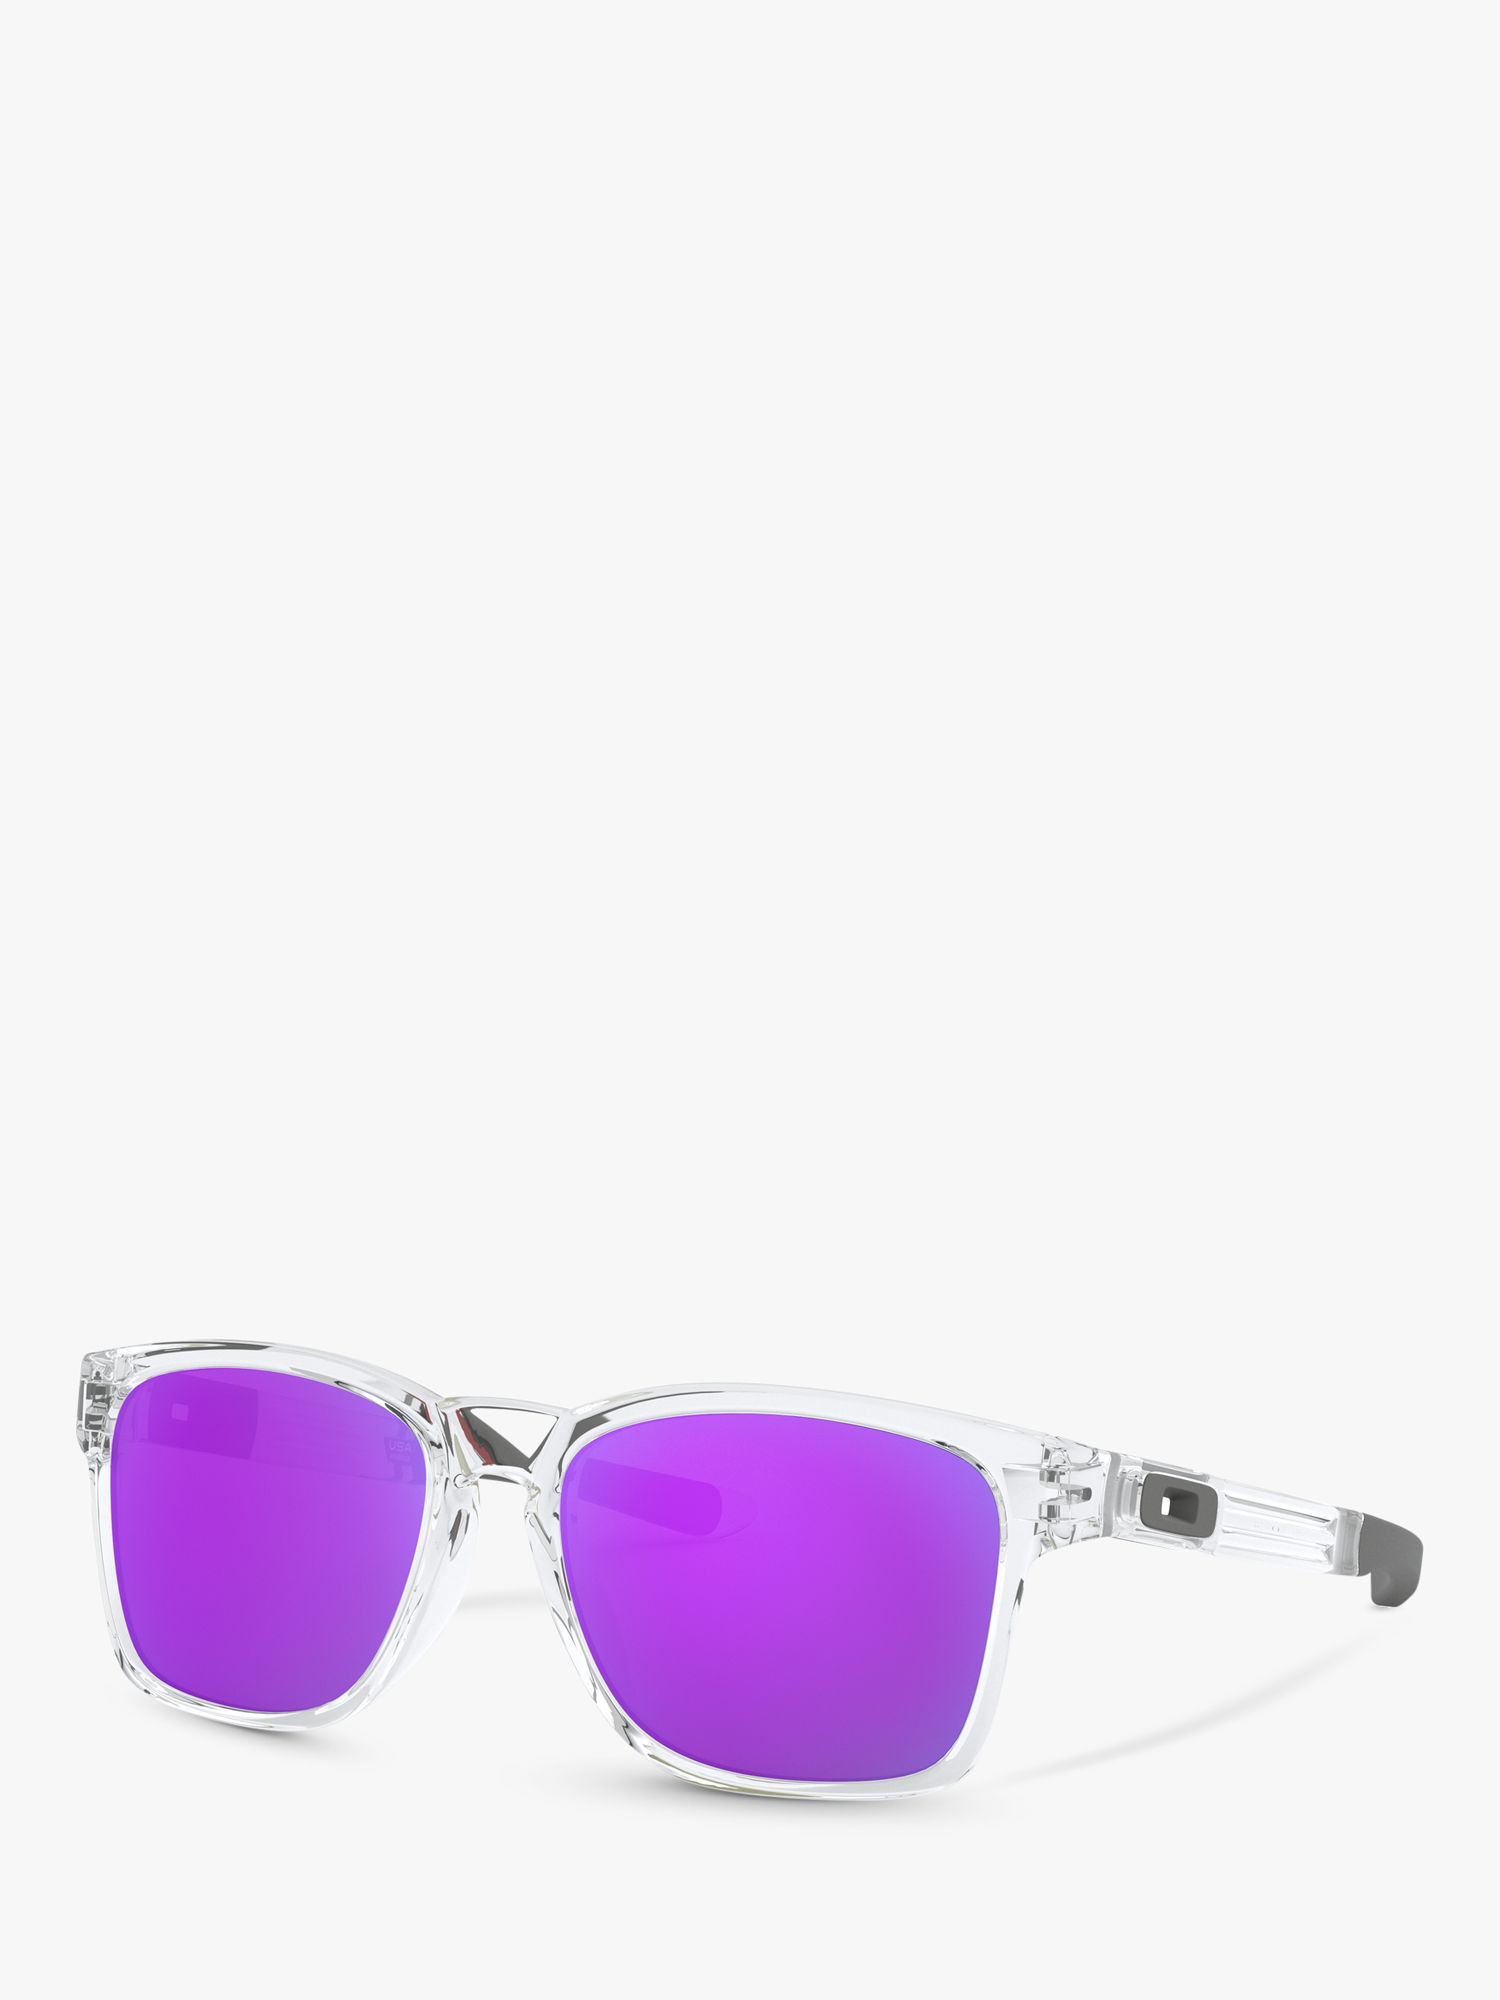 Oakley OO9272 Catalyst Rectangular Sunglasses, Purple